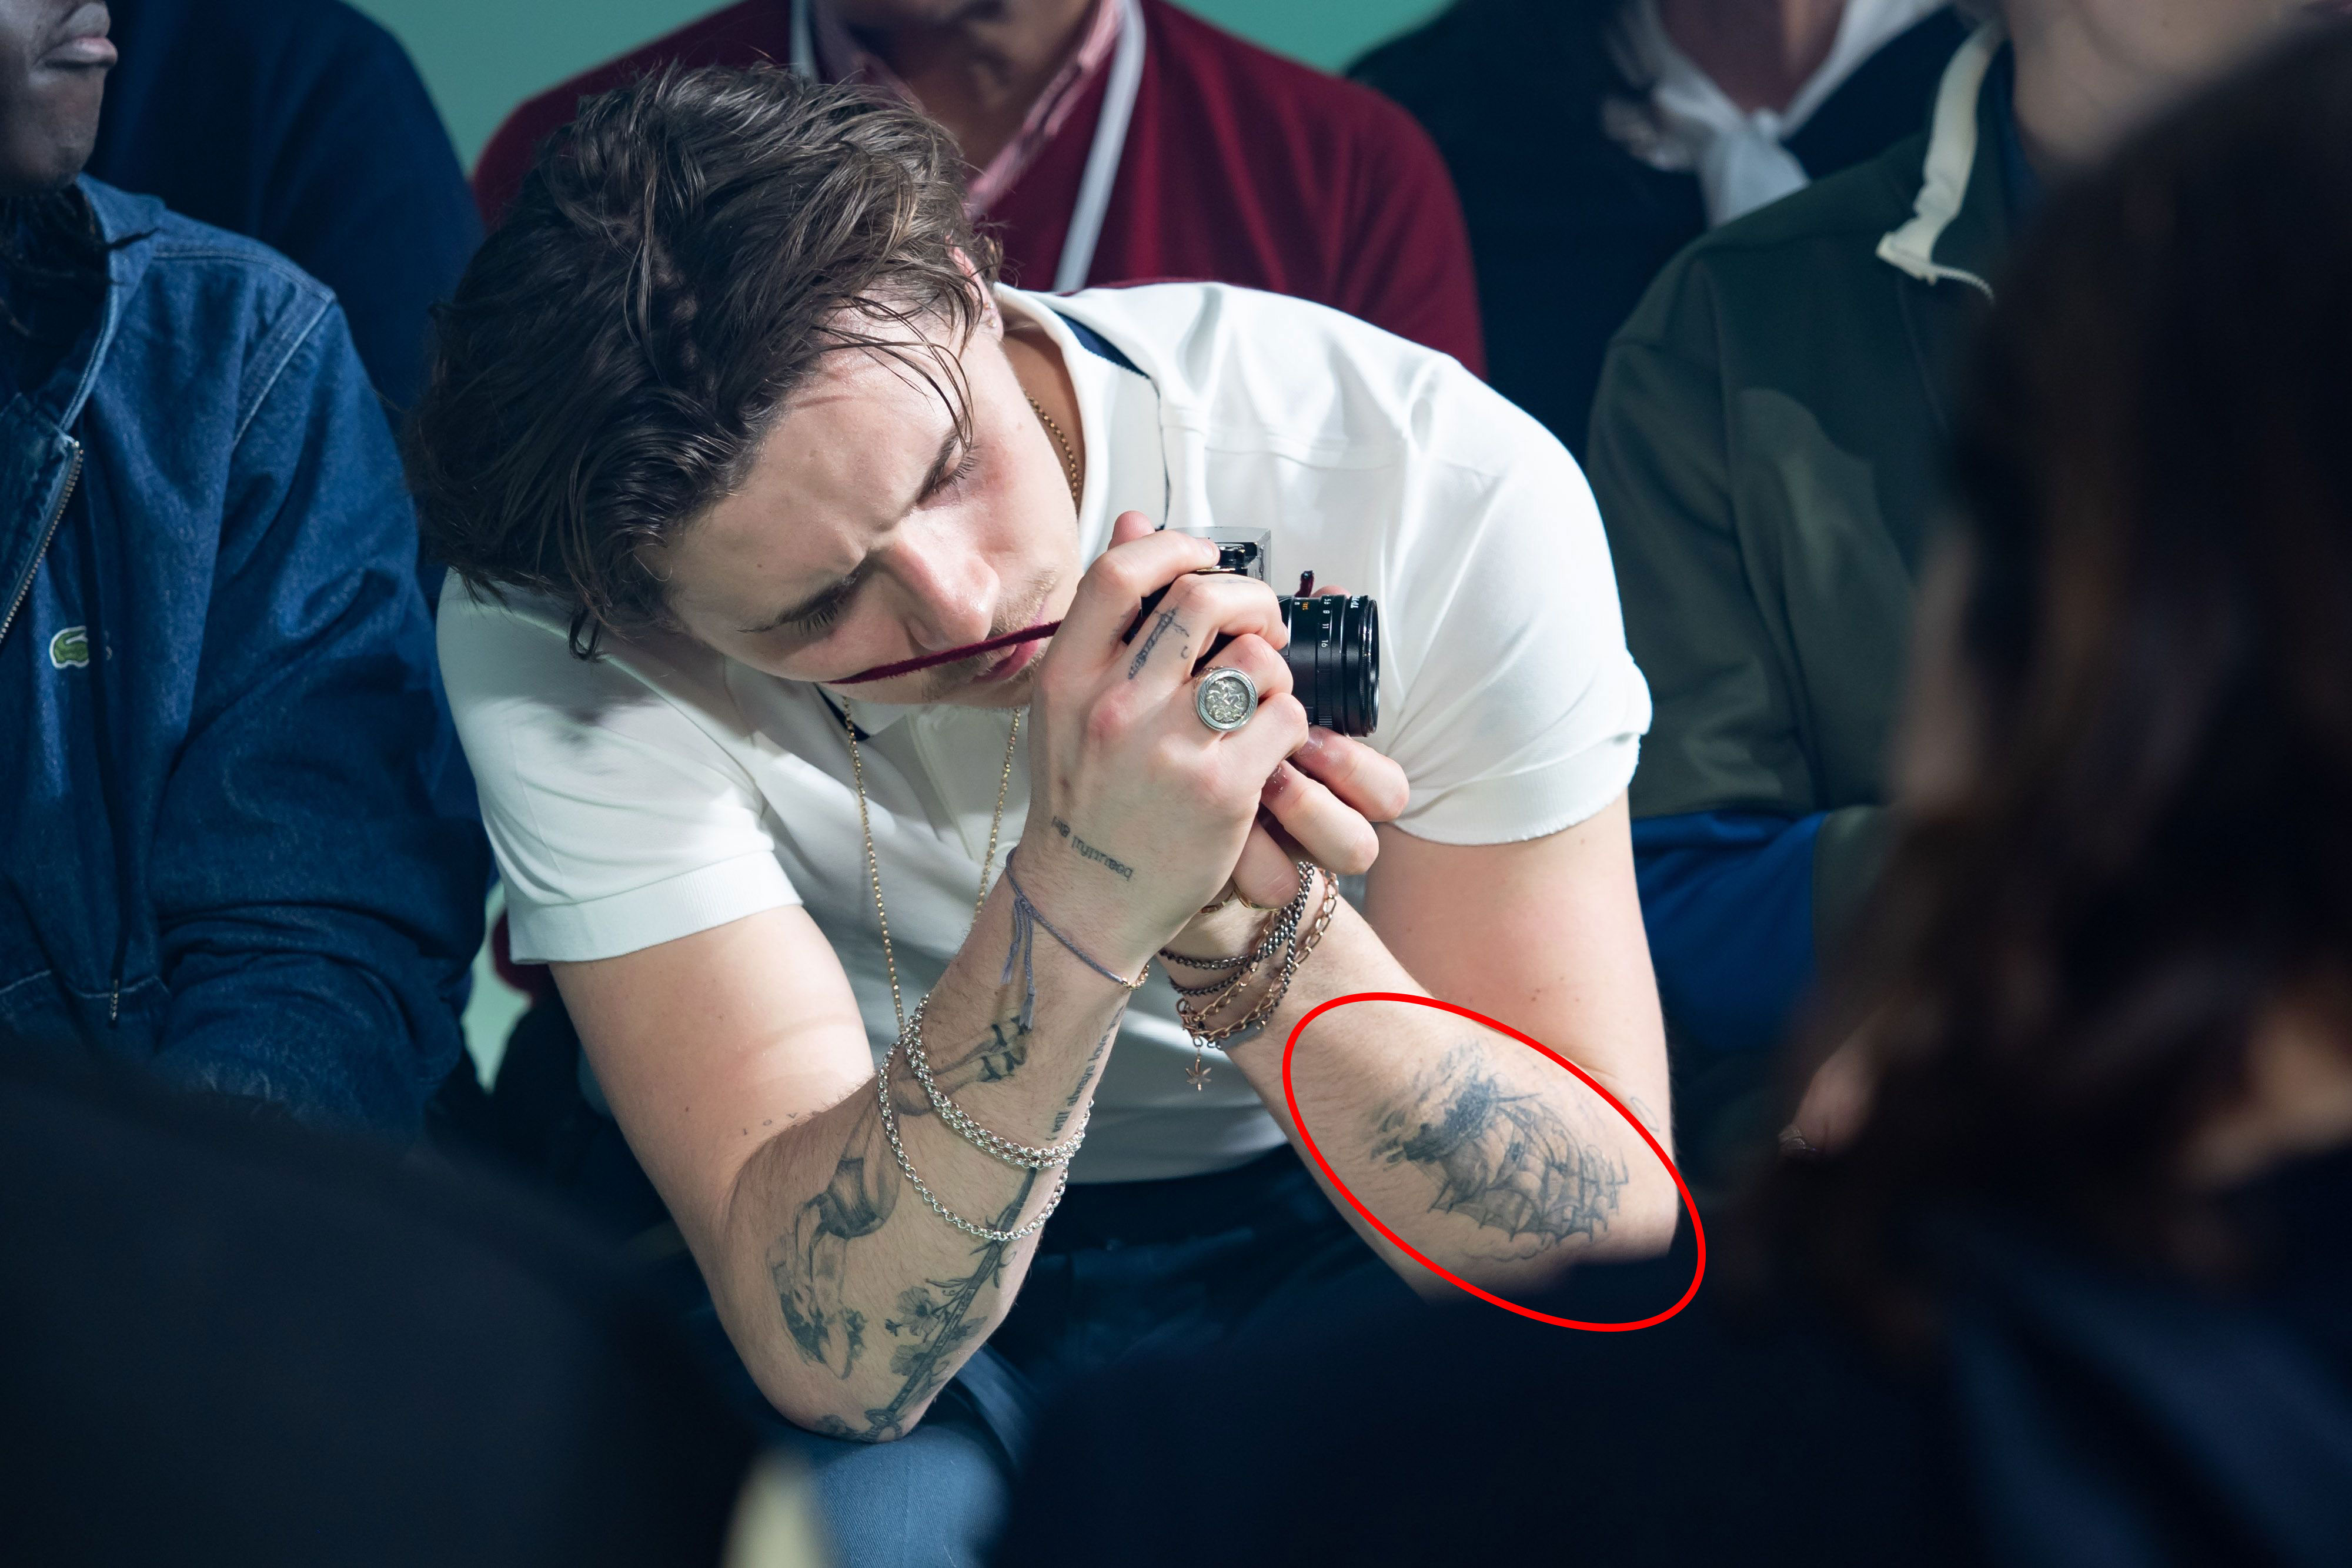 David Beckham's Tattoo Artist Says He Feels No Pain